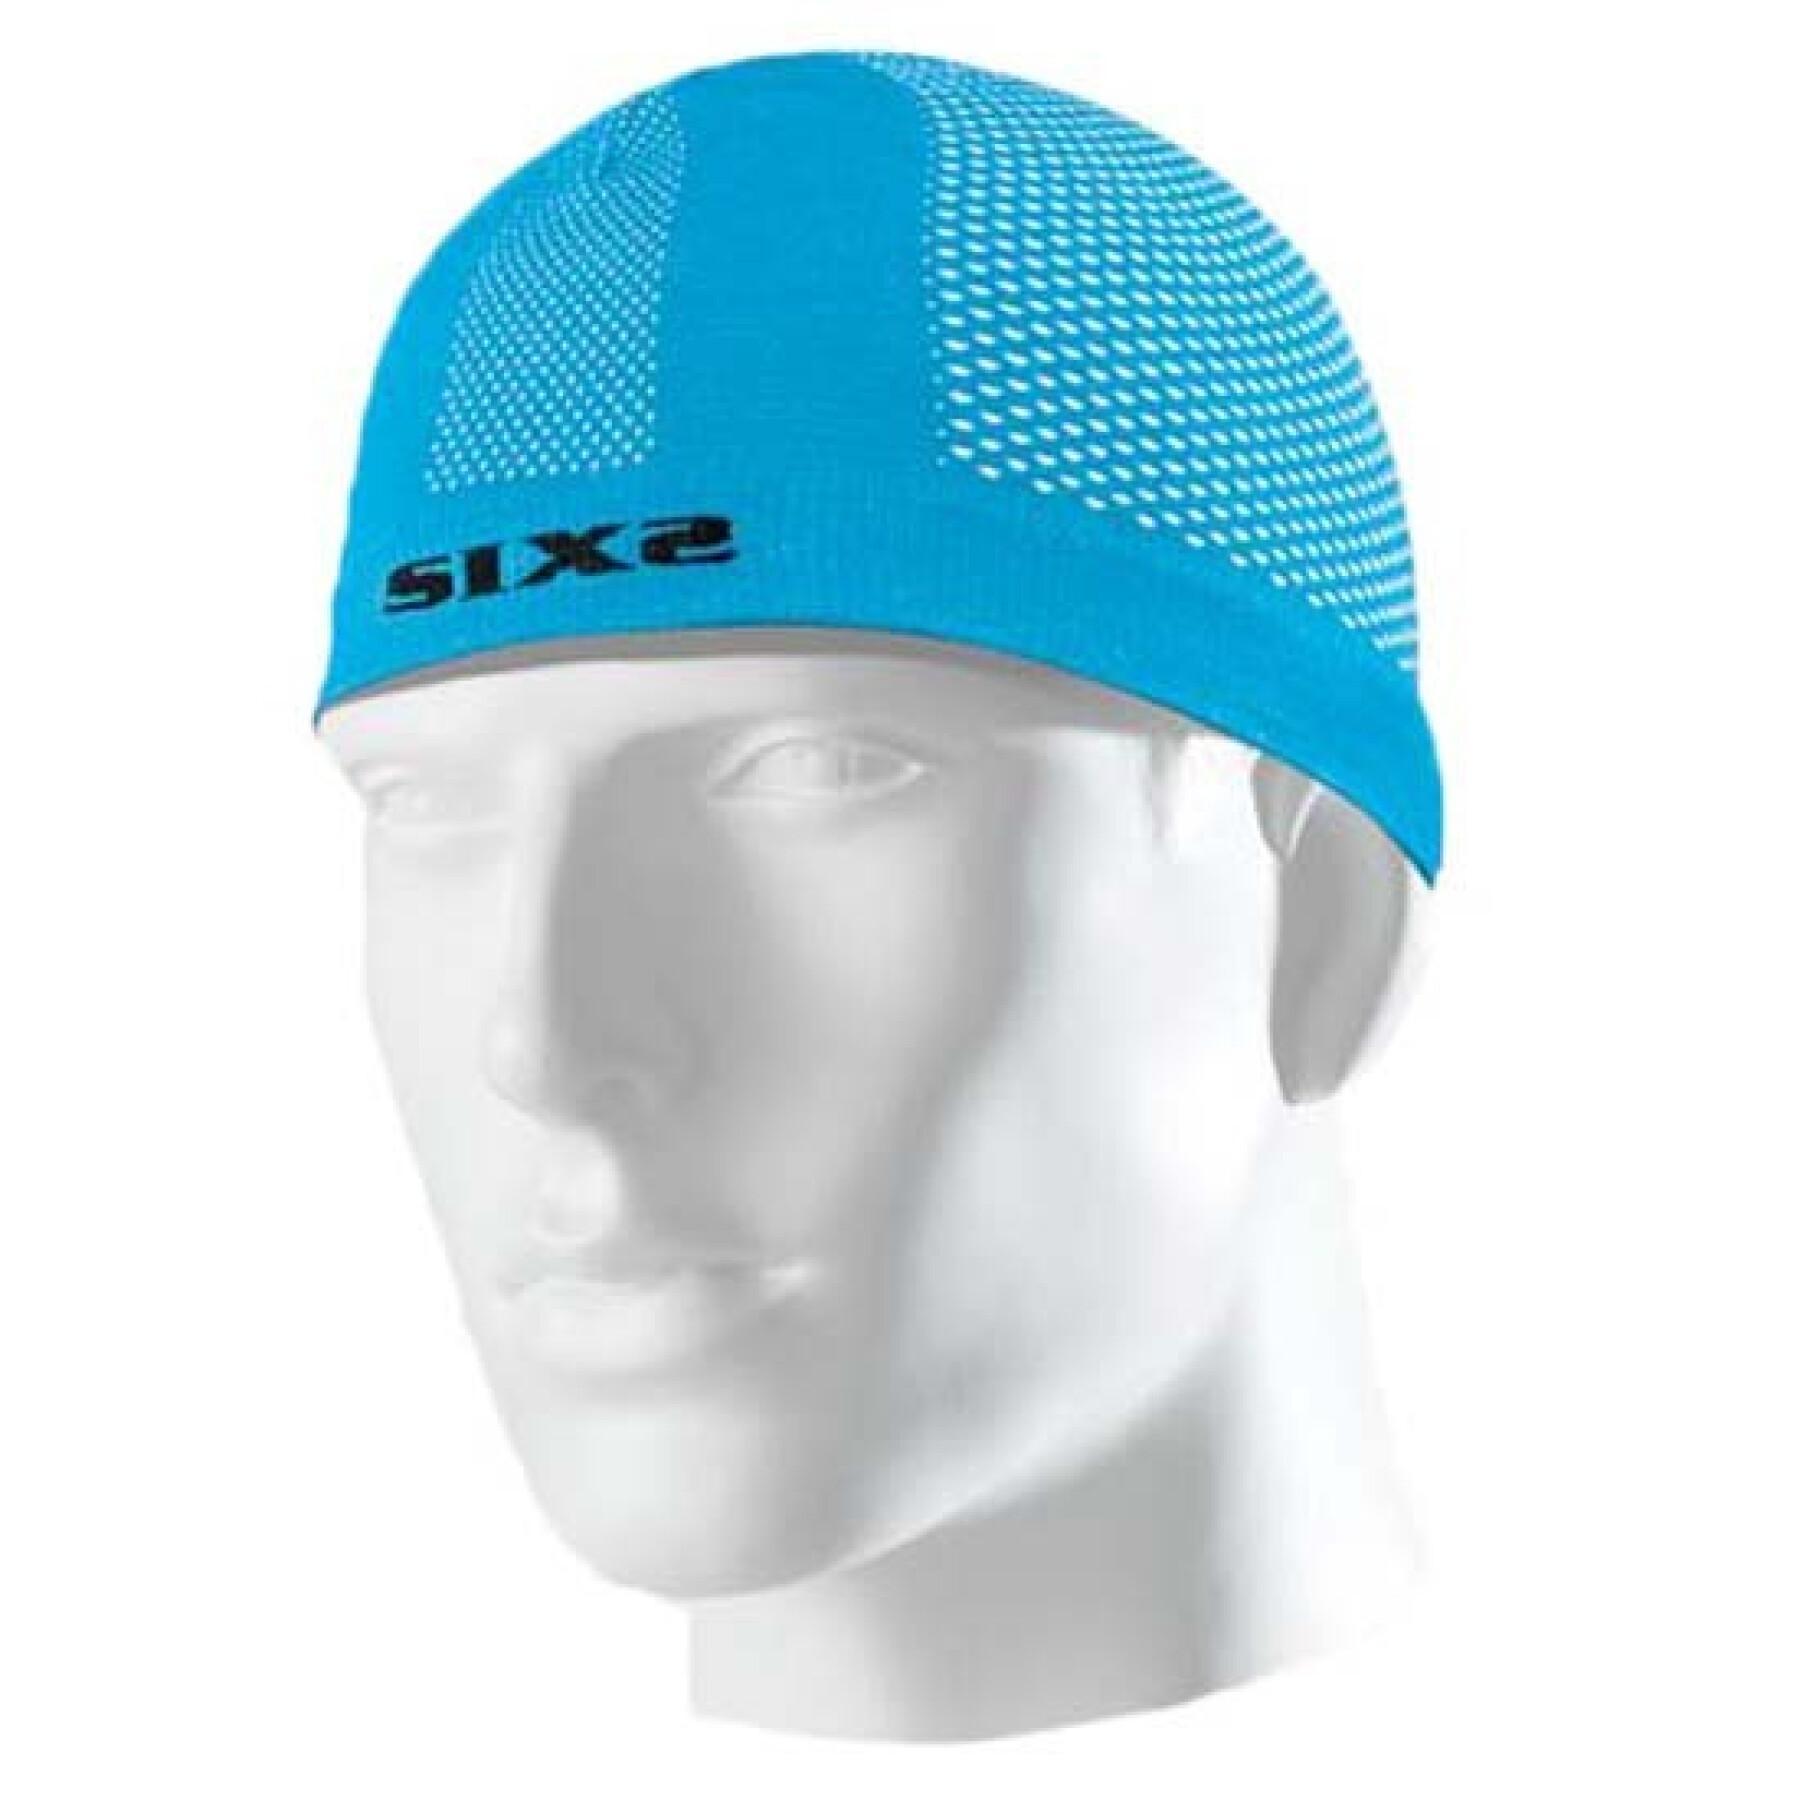 Helmet cap Sixs SCX